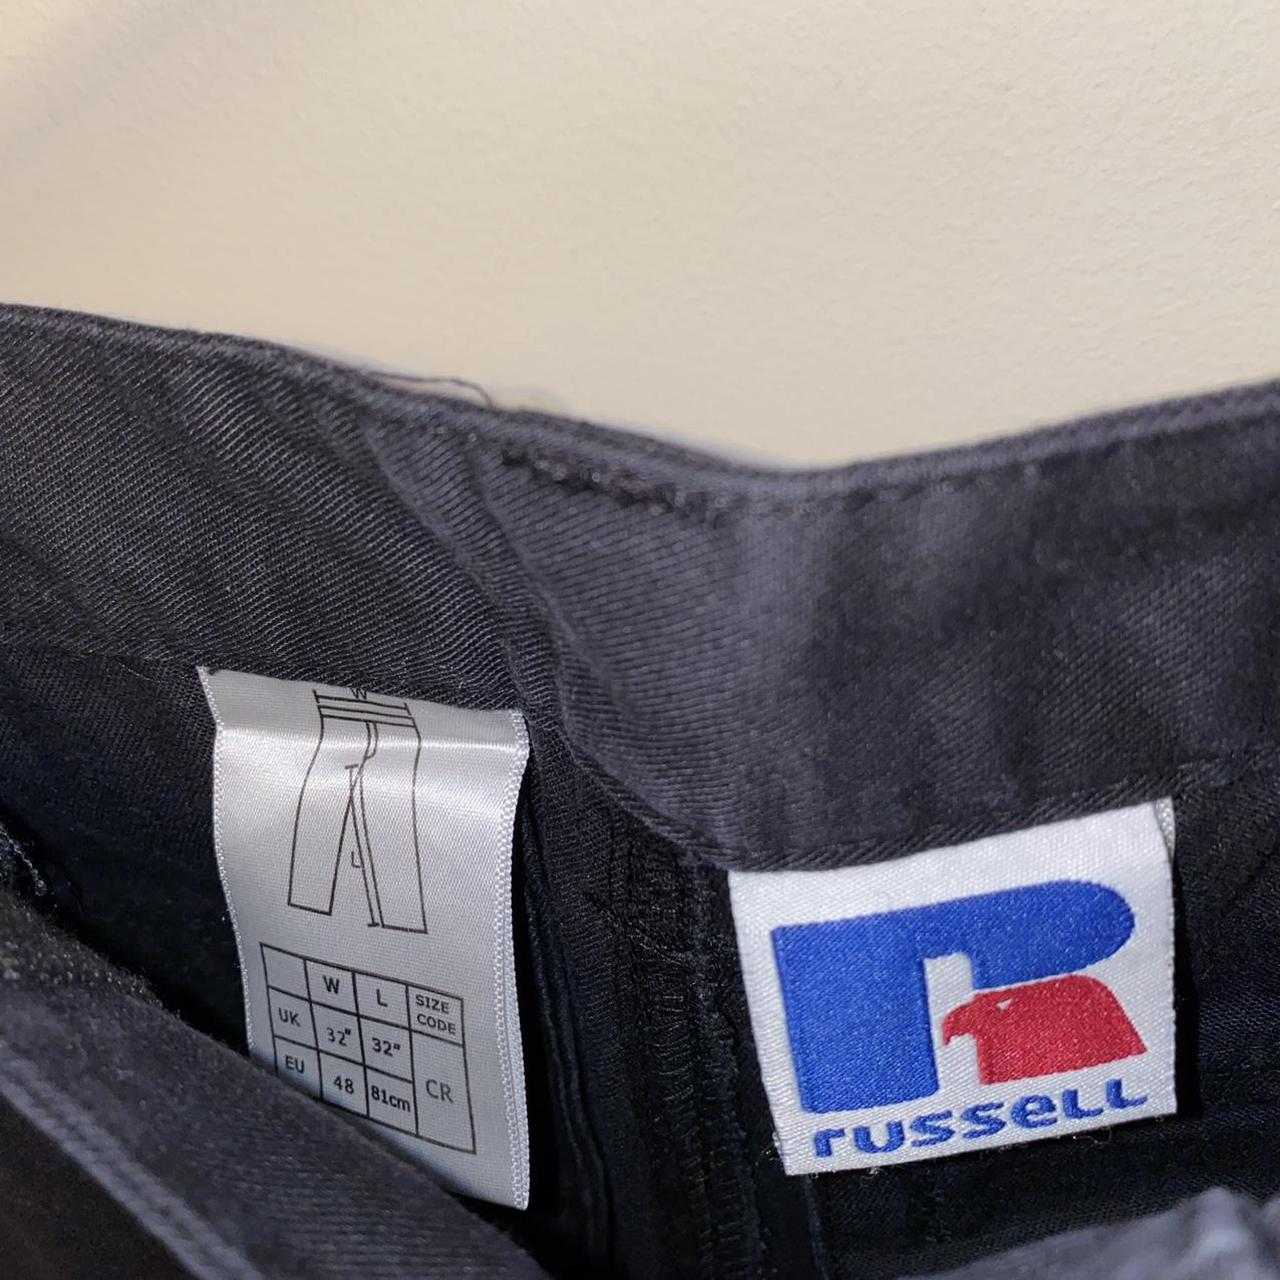 Russell Athletic cargo pants in black Adjustable - Depop